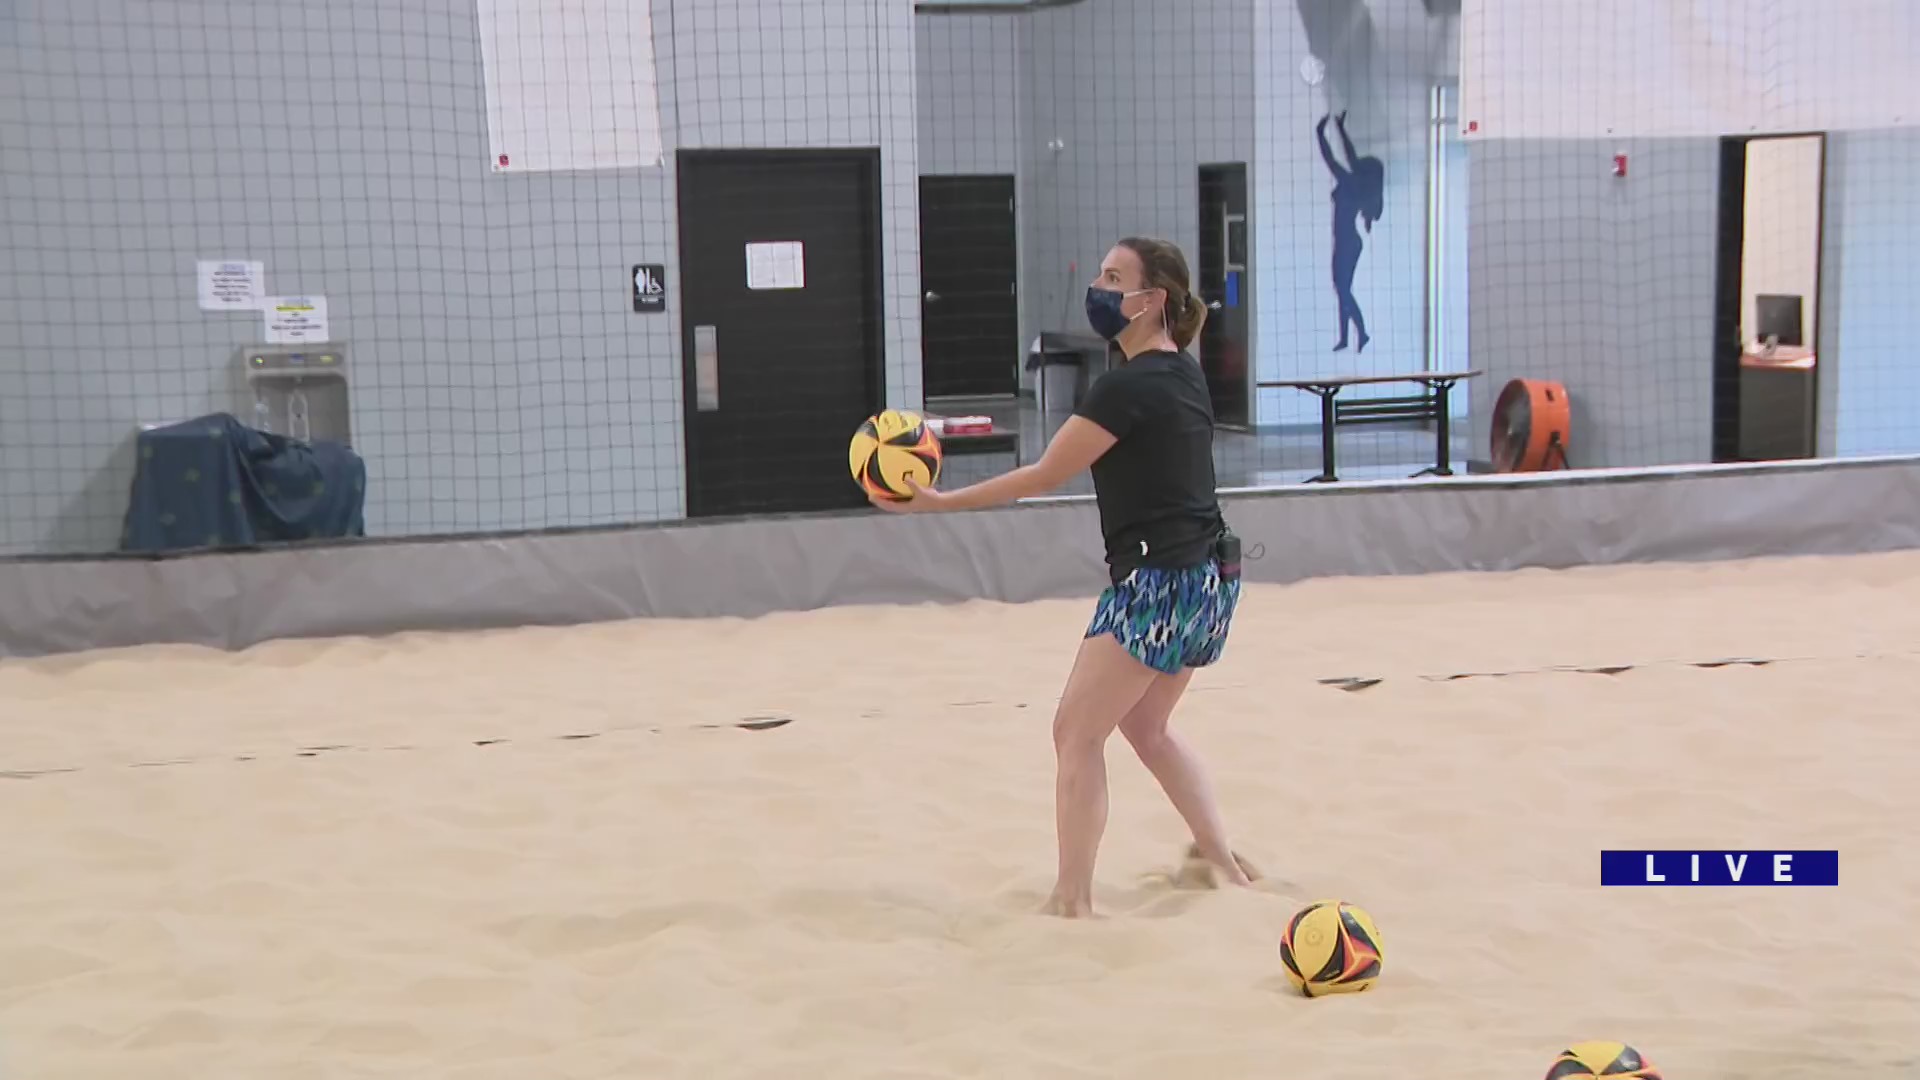 Around Town checks out Progression Beach Volleyball